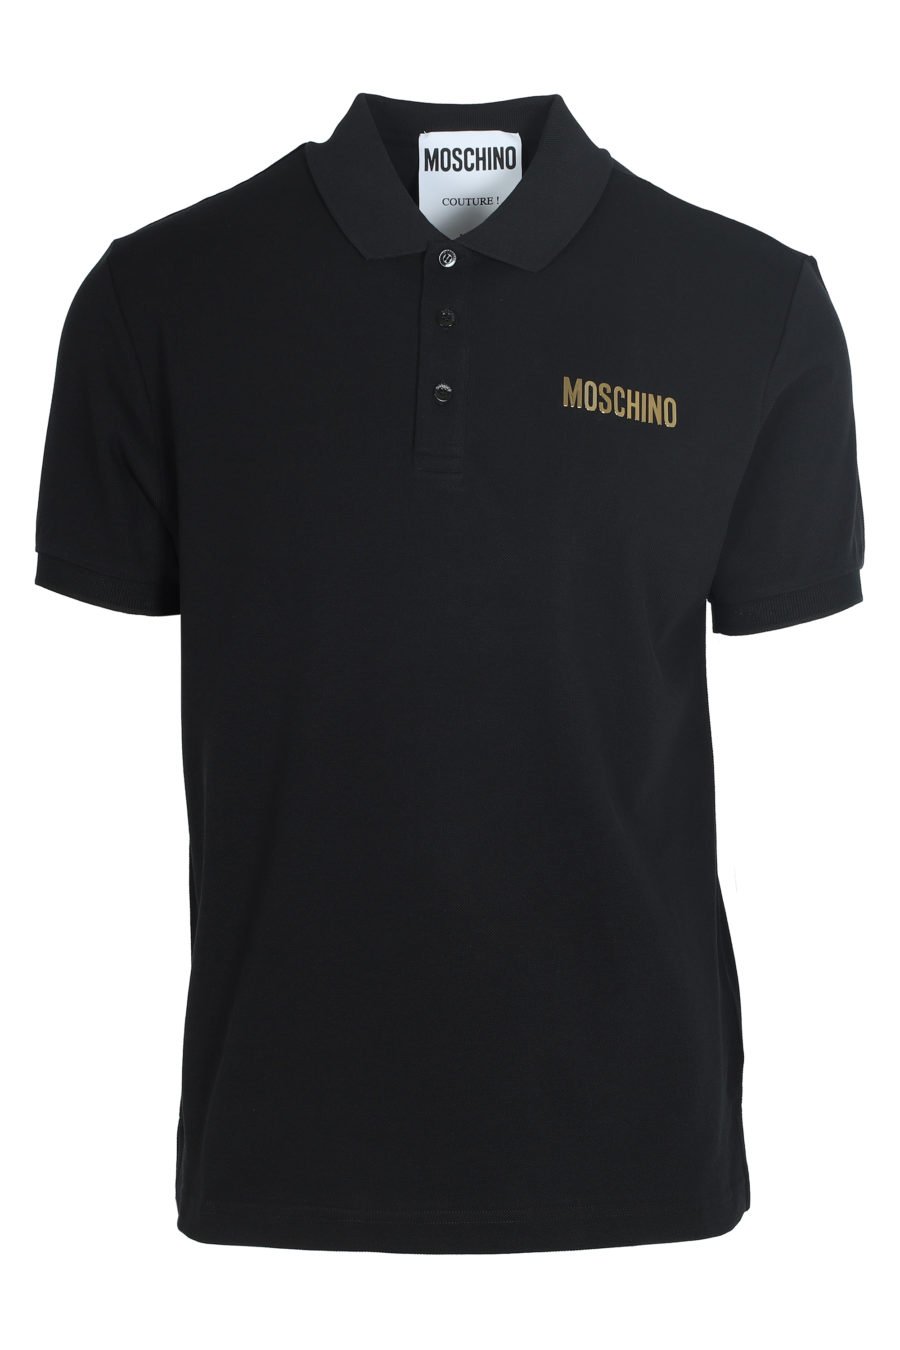 Black polo shirt with gold logo - IMG 5984